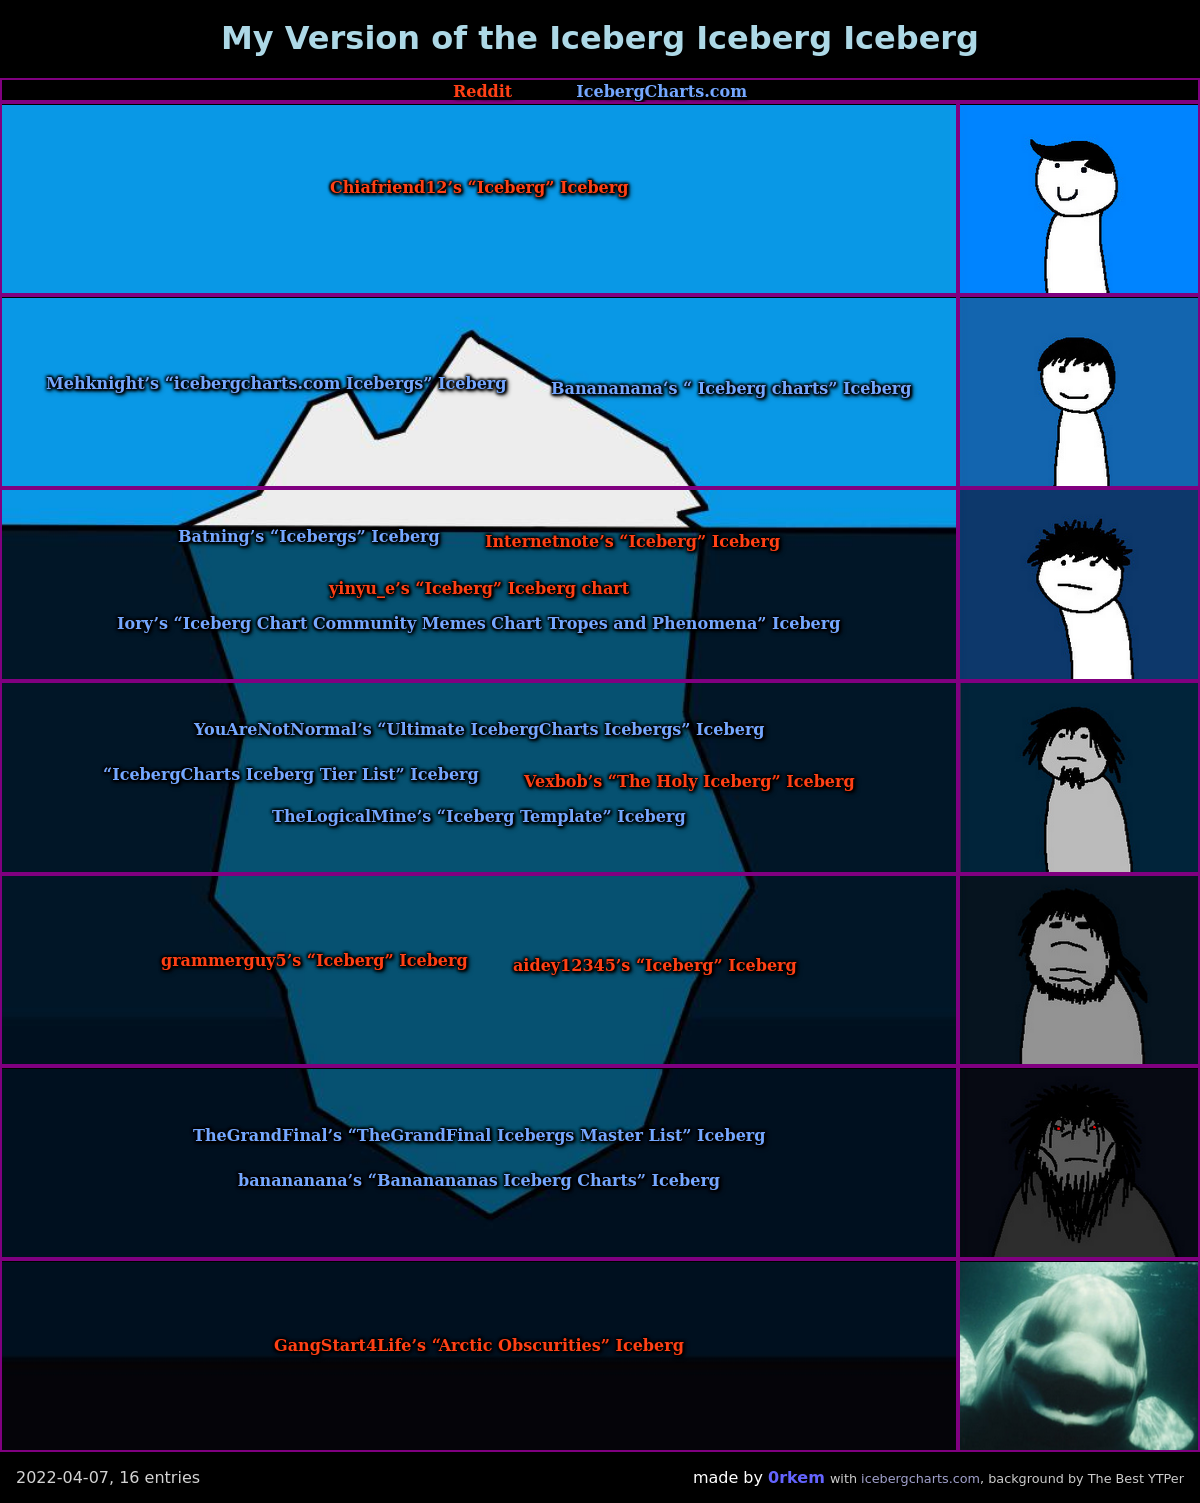 Nicos nextbots iceberg : r/IcebergCharts